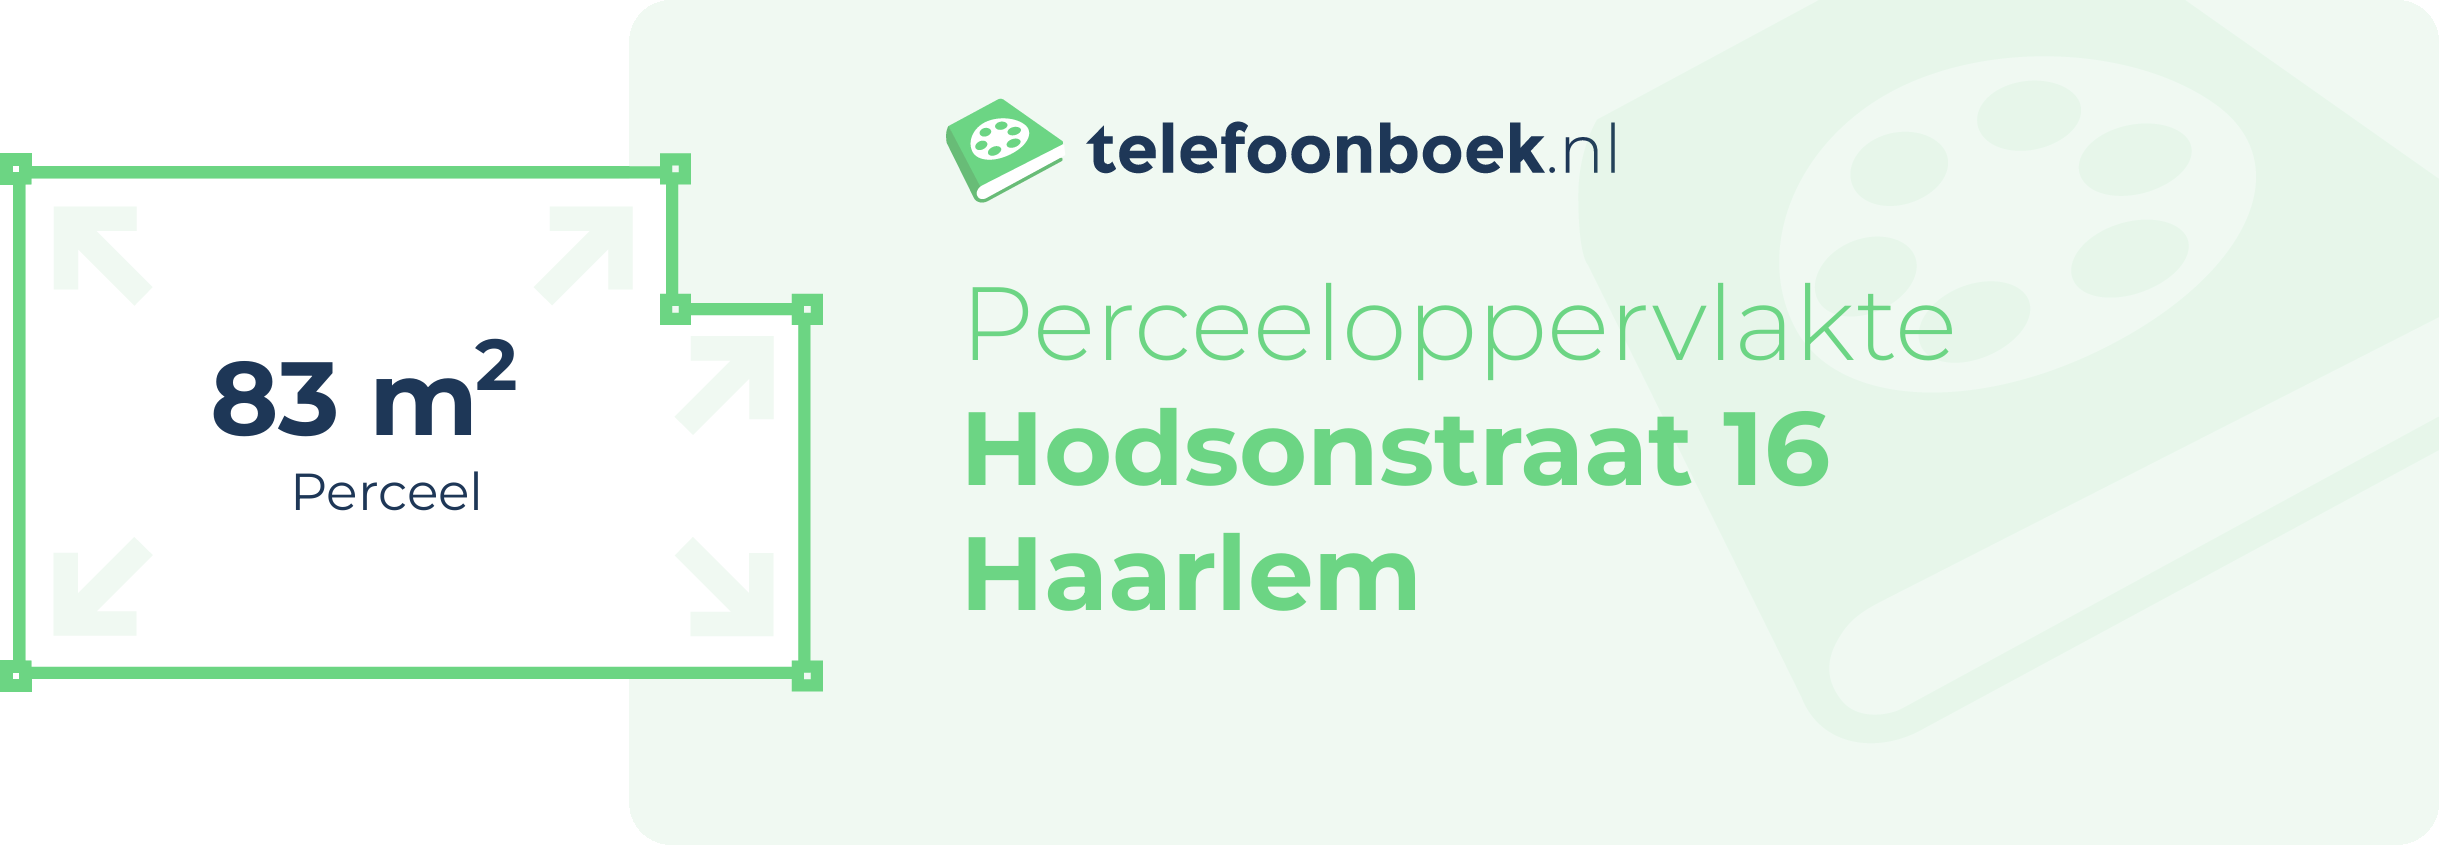 Perceeloppervlakte Hodsonstraat 16 Haarlem